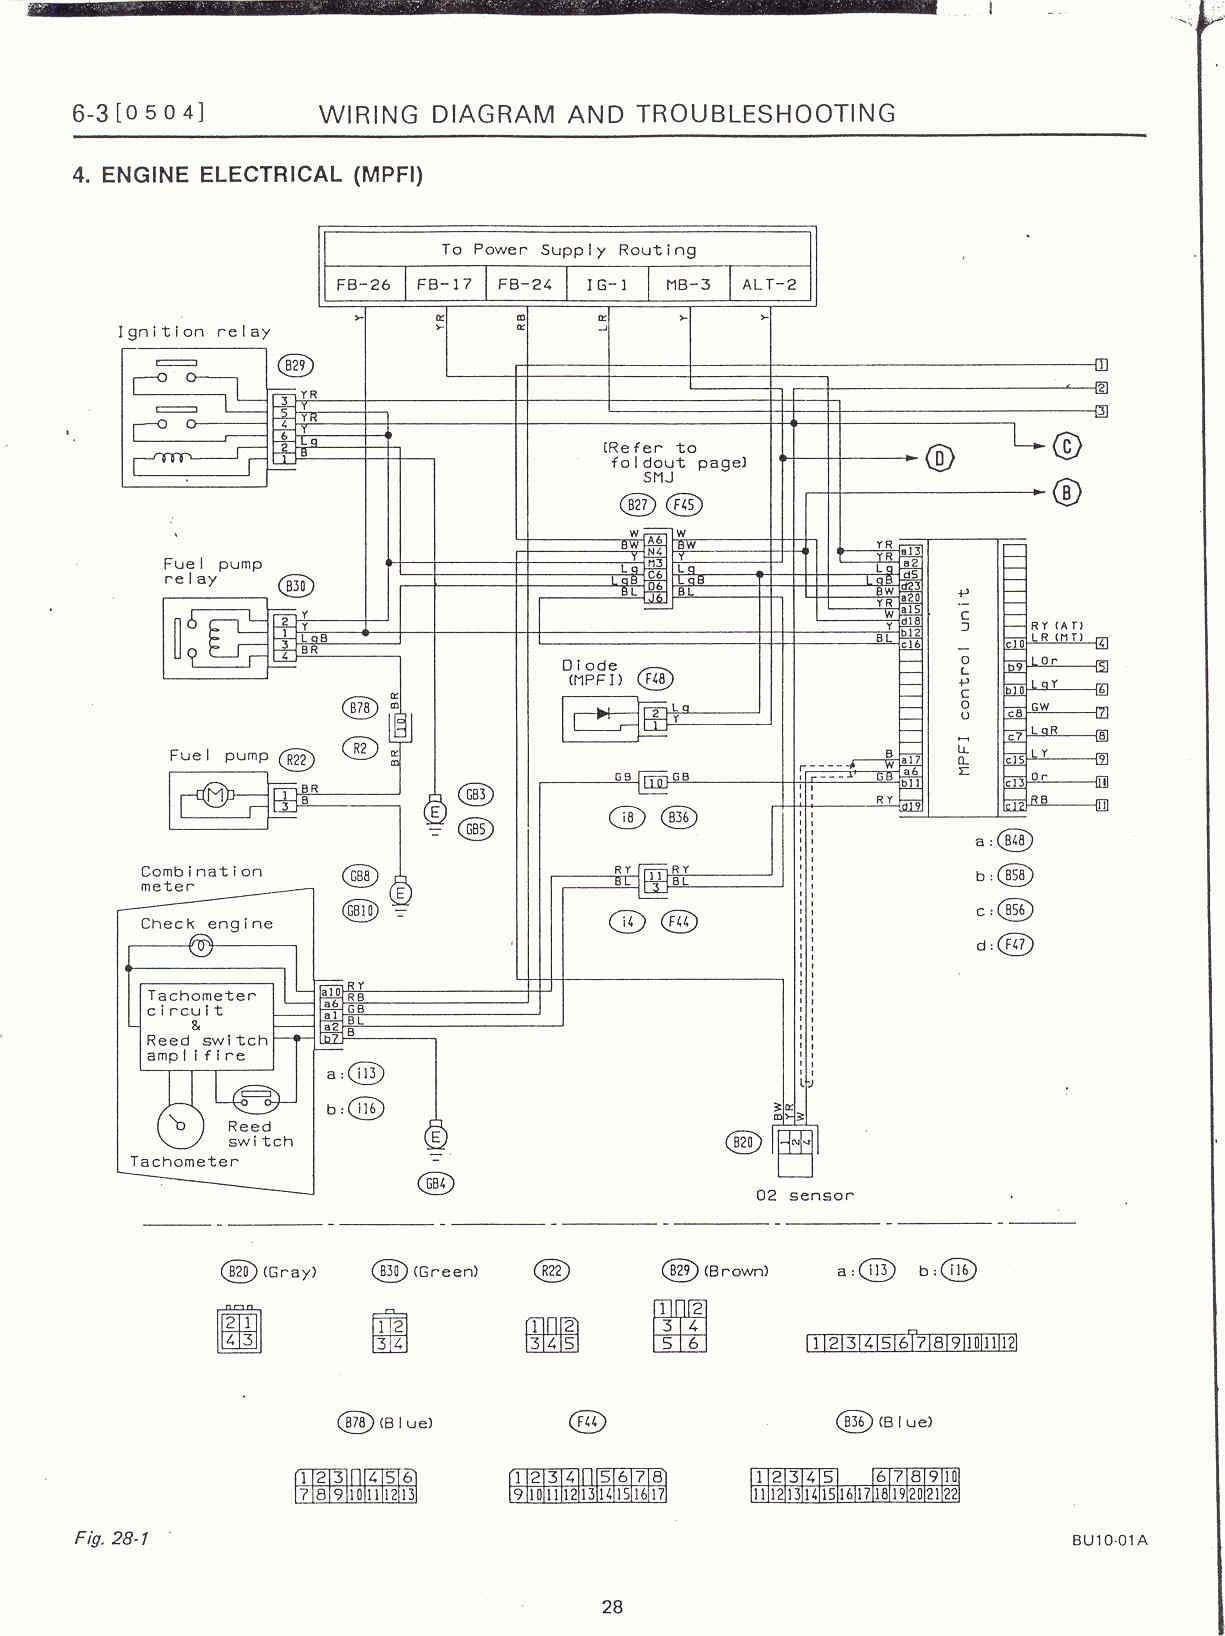 Honda Ca77 Wiring Diagram from diagramweb.net